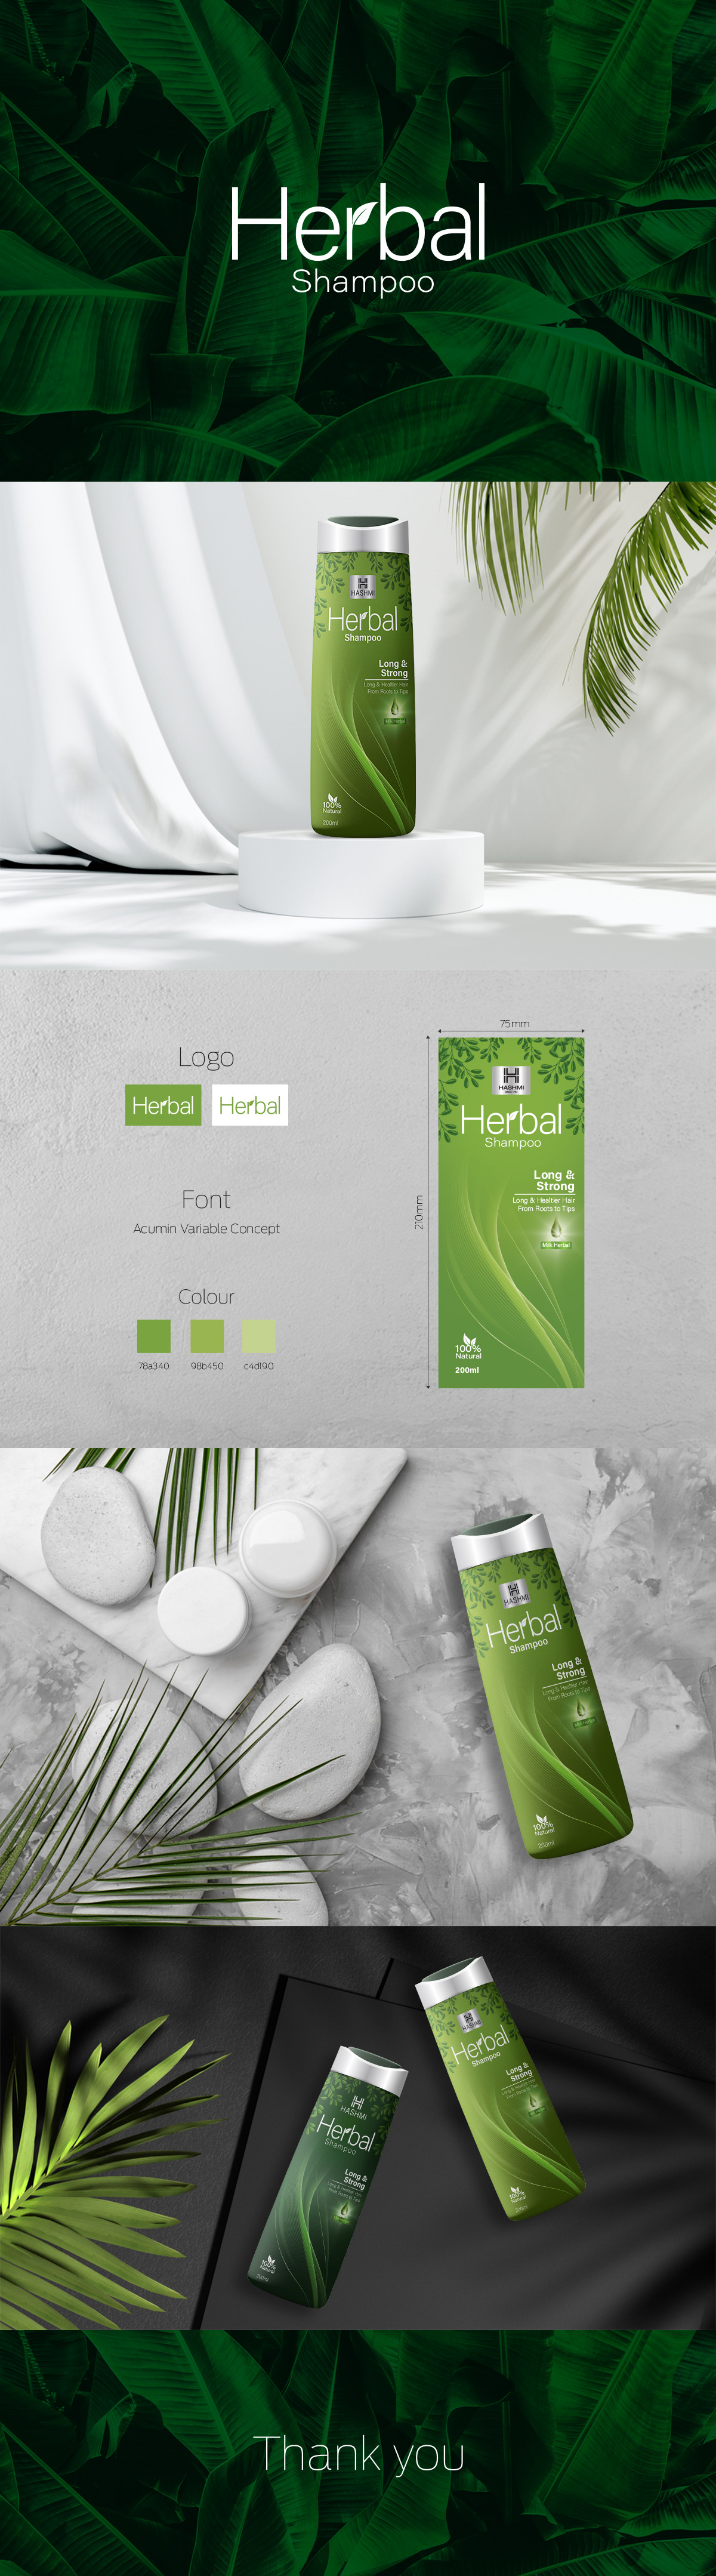 design herbal herbal shampoo Packaging shampoo shampoo bottle